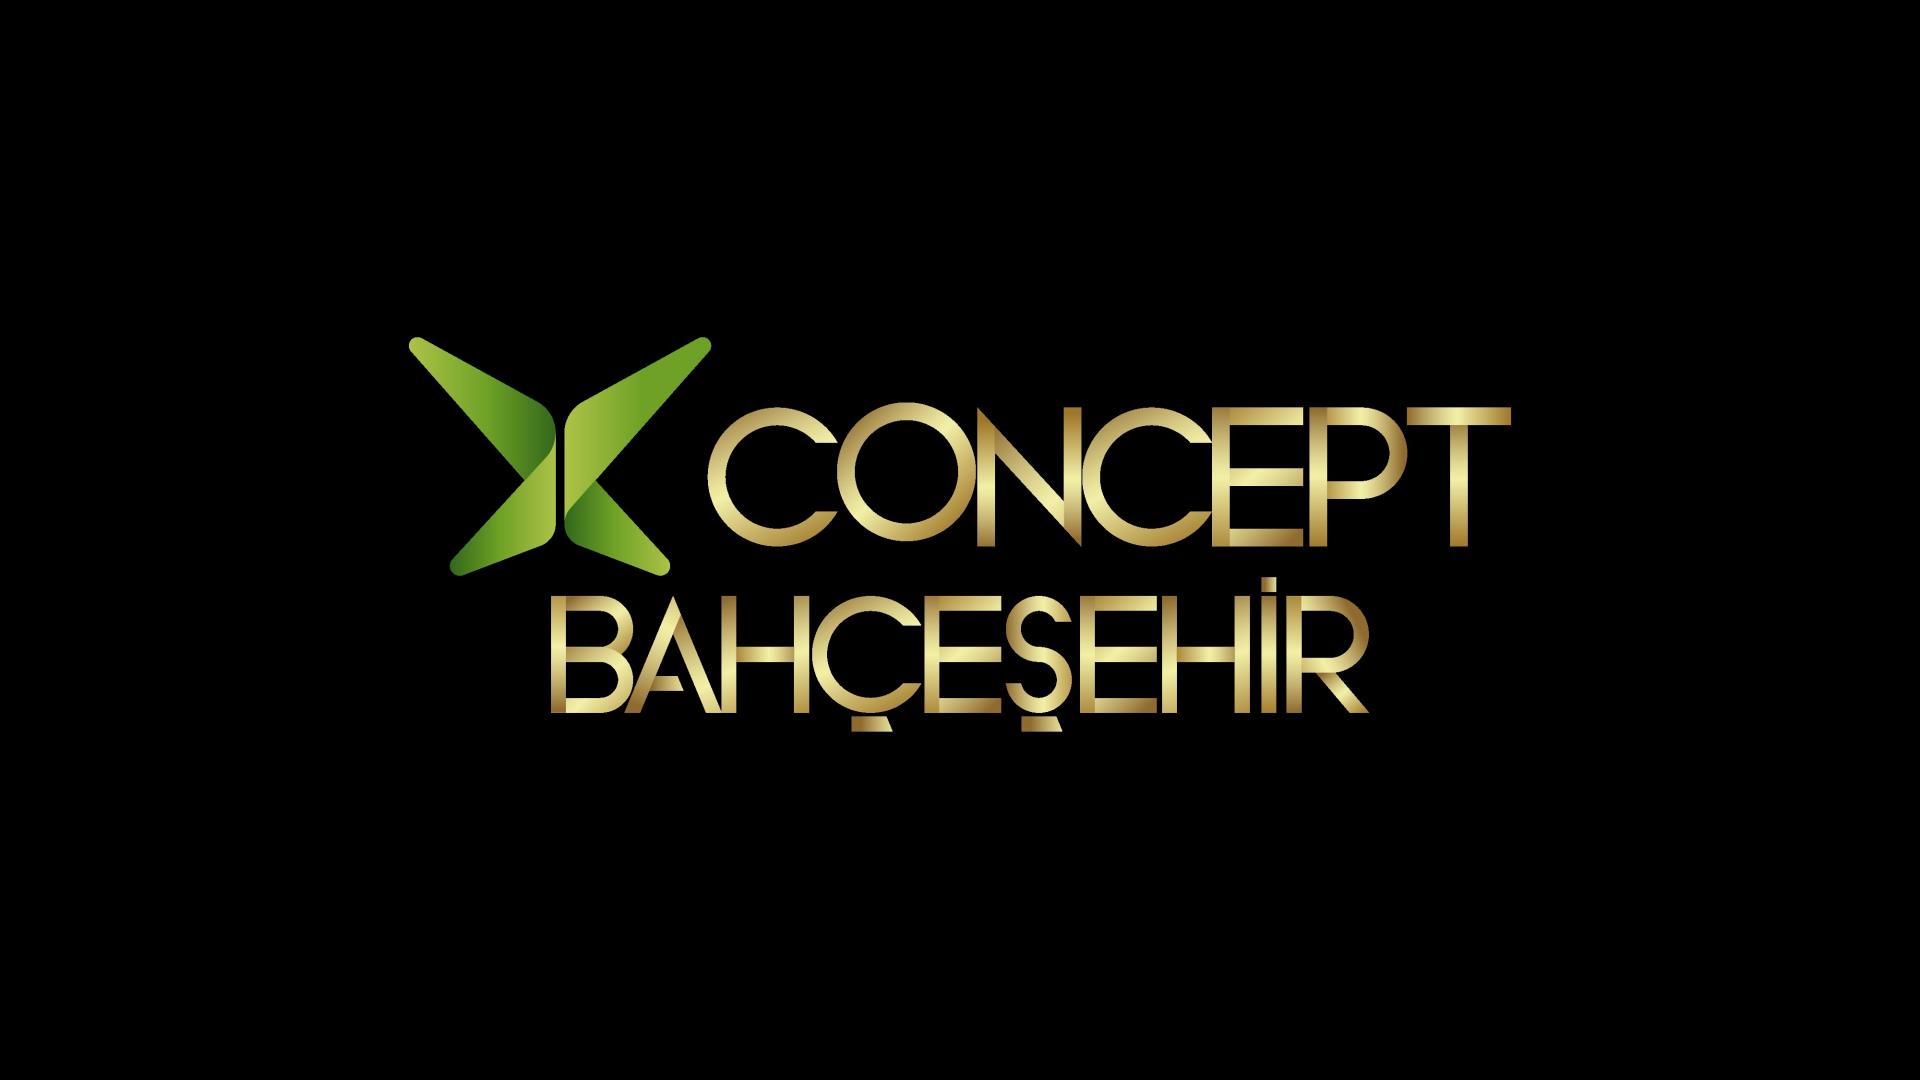 X Concept Bahçeşehir